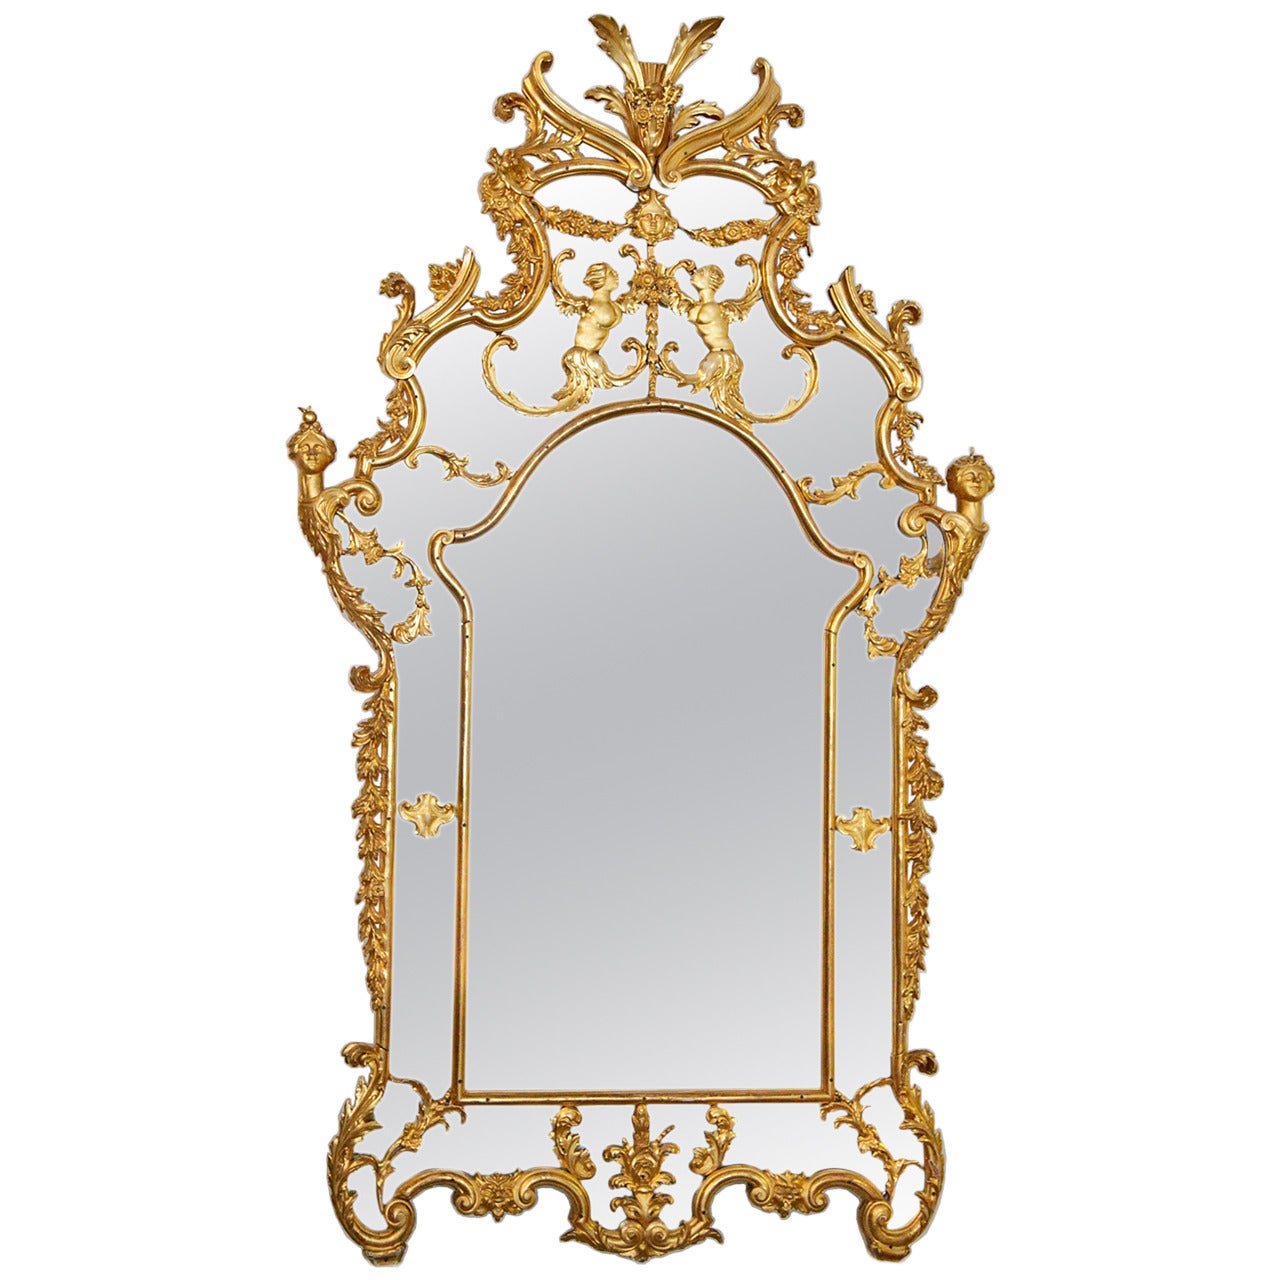 Magnificent Florence Palace Mirror, circa 1750 - 1770